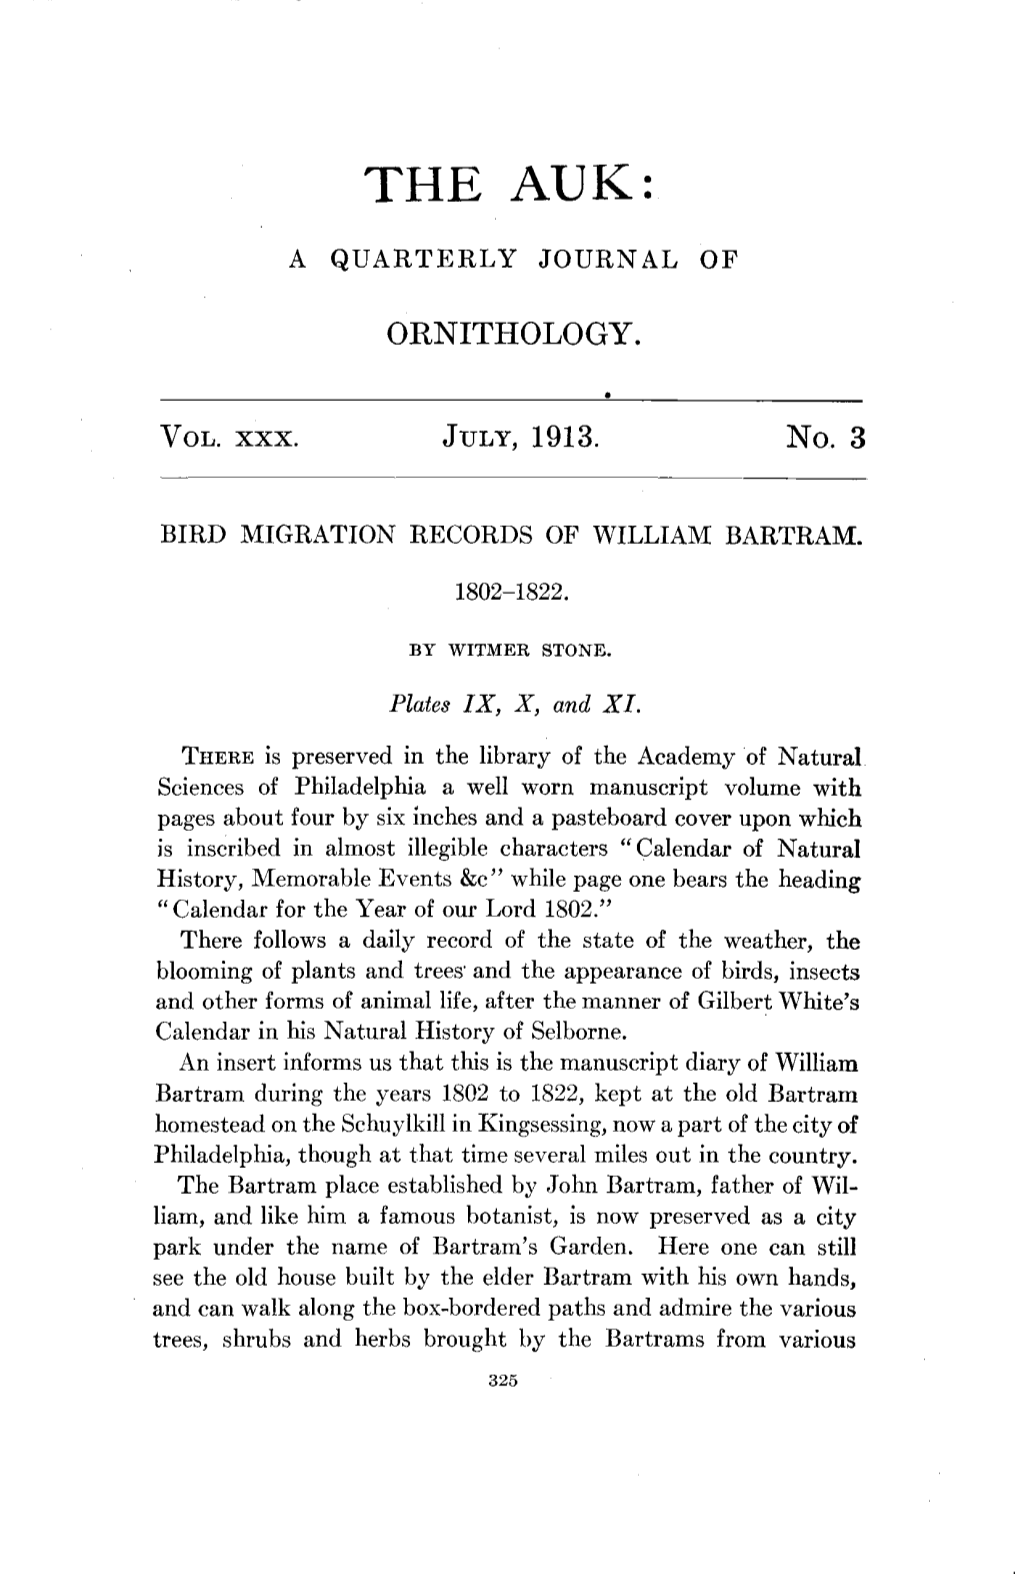 Bird Migration Records of William Bartram. 1802-1822